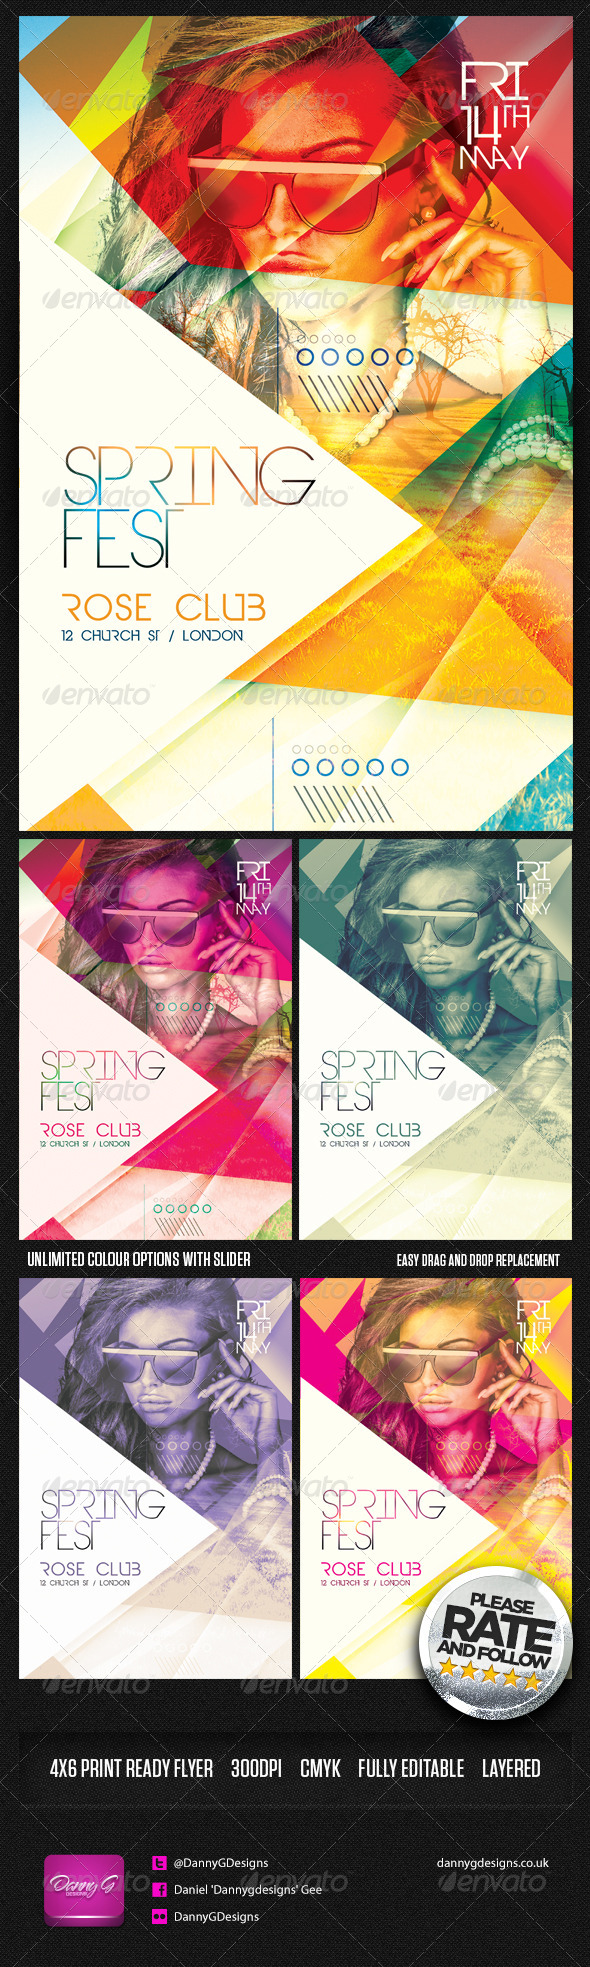 Spring Fest Flyer Template PSD